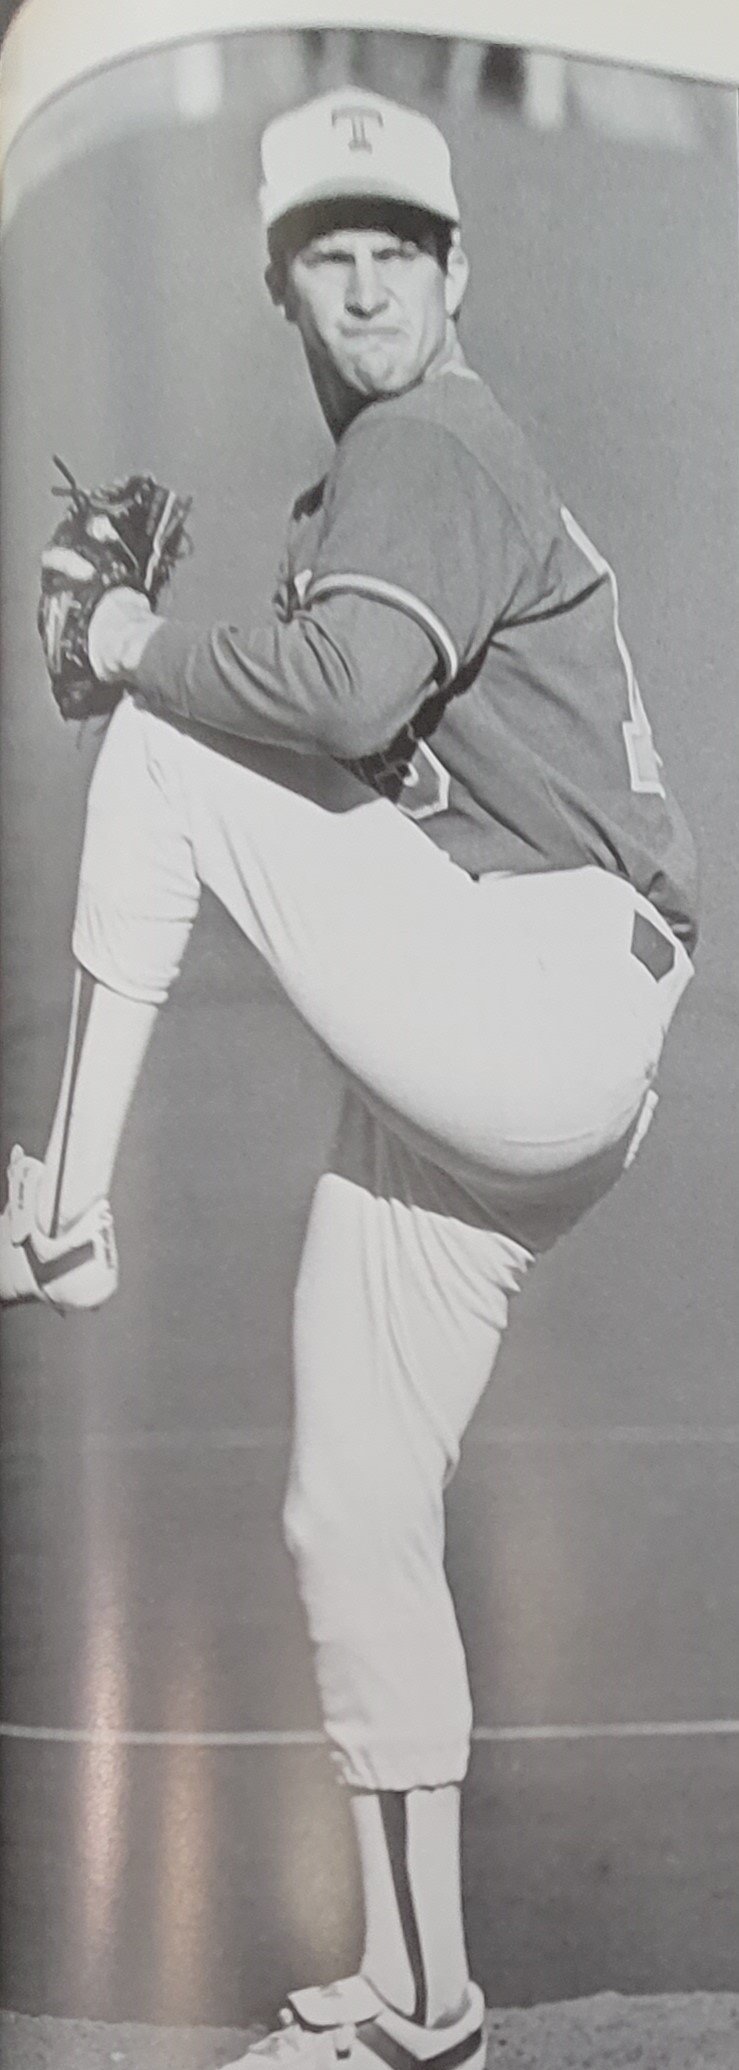 1987-1988 - baseball -Curry Harden.jpg